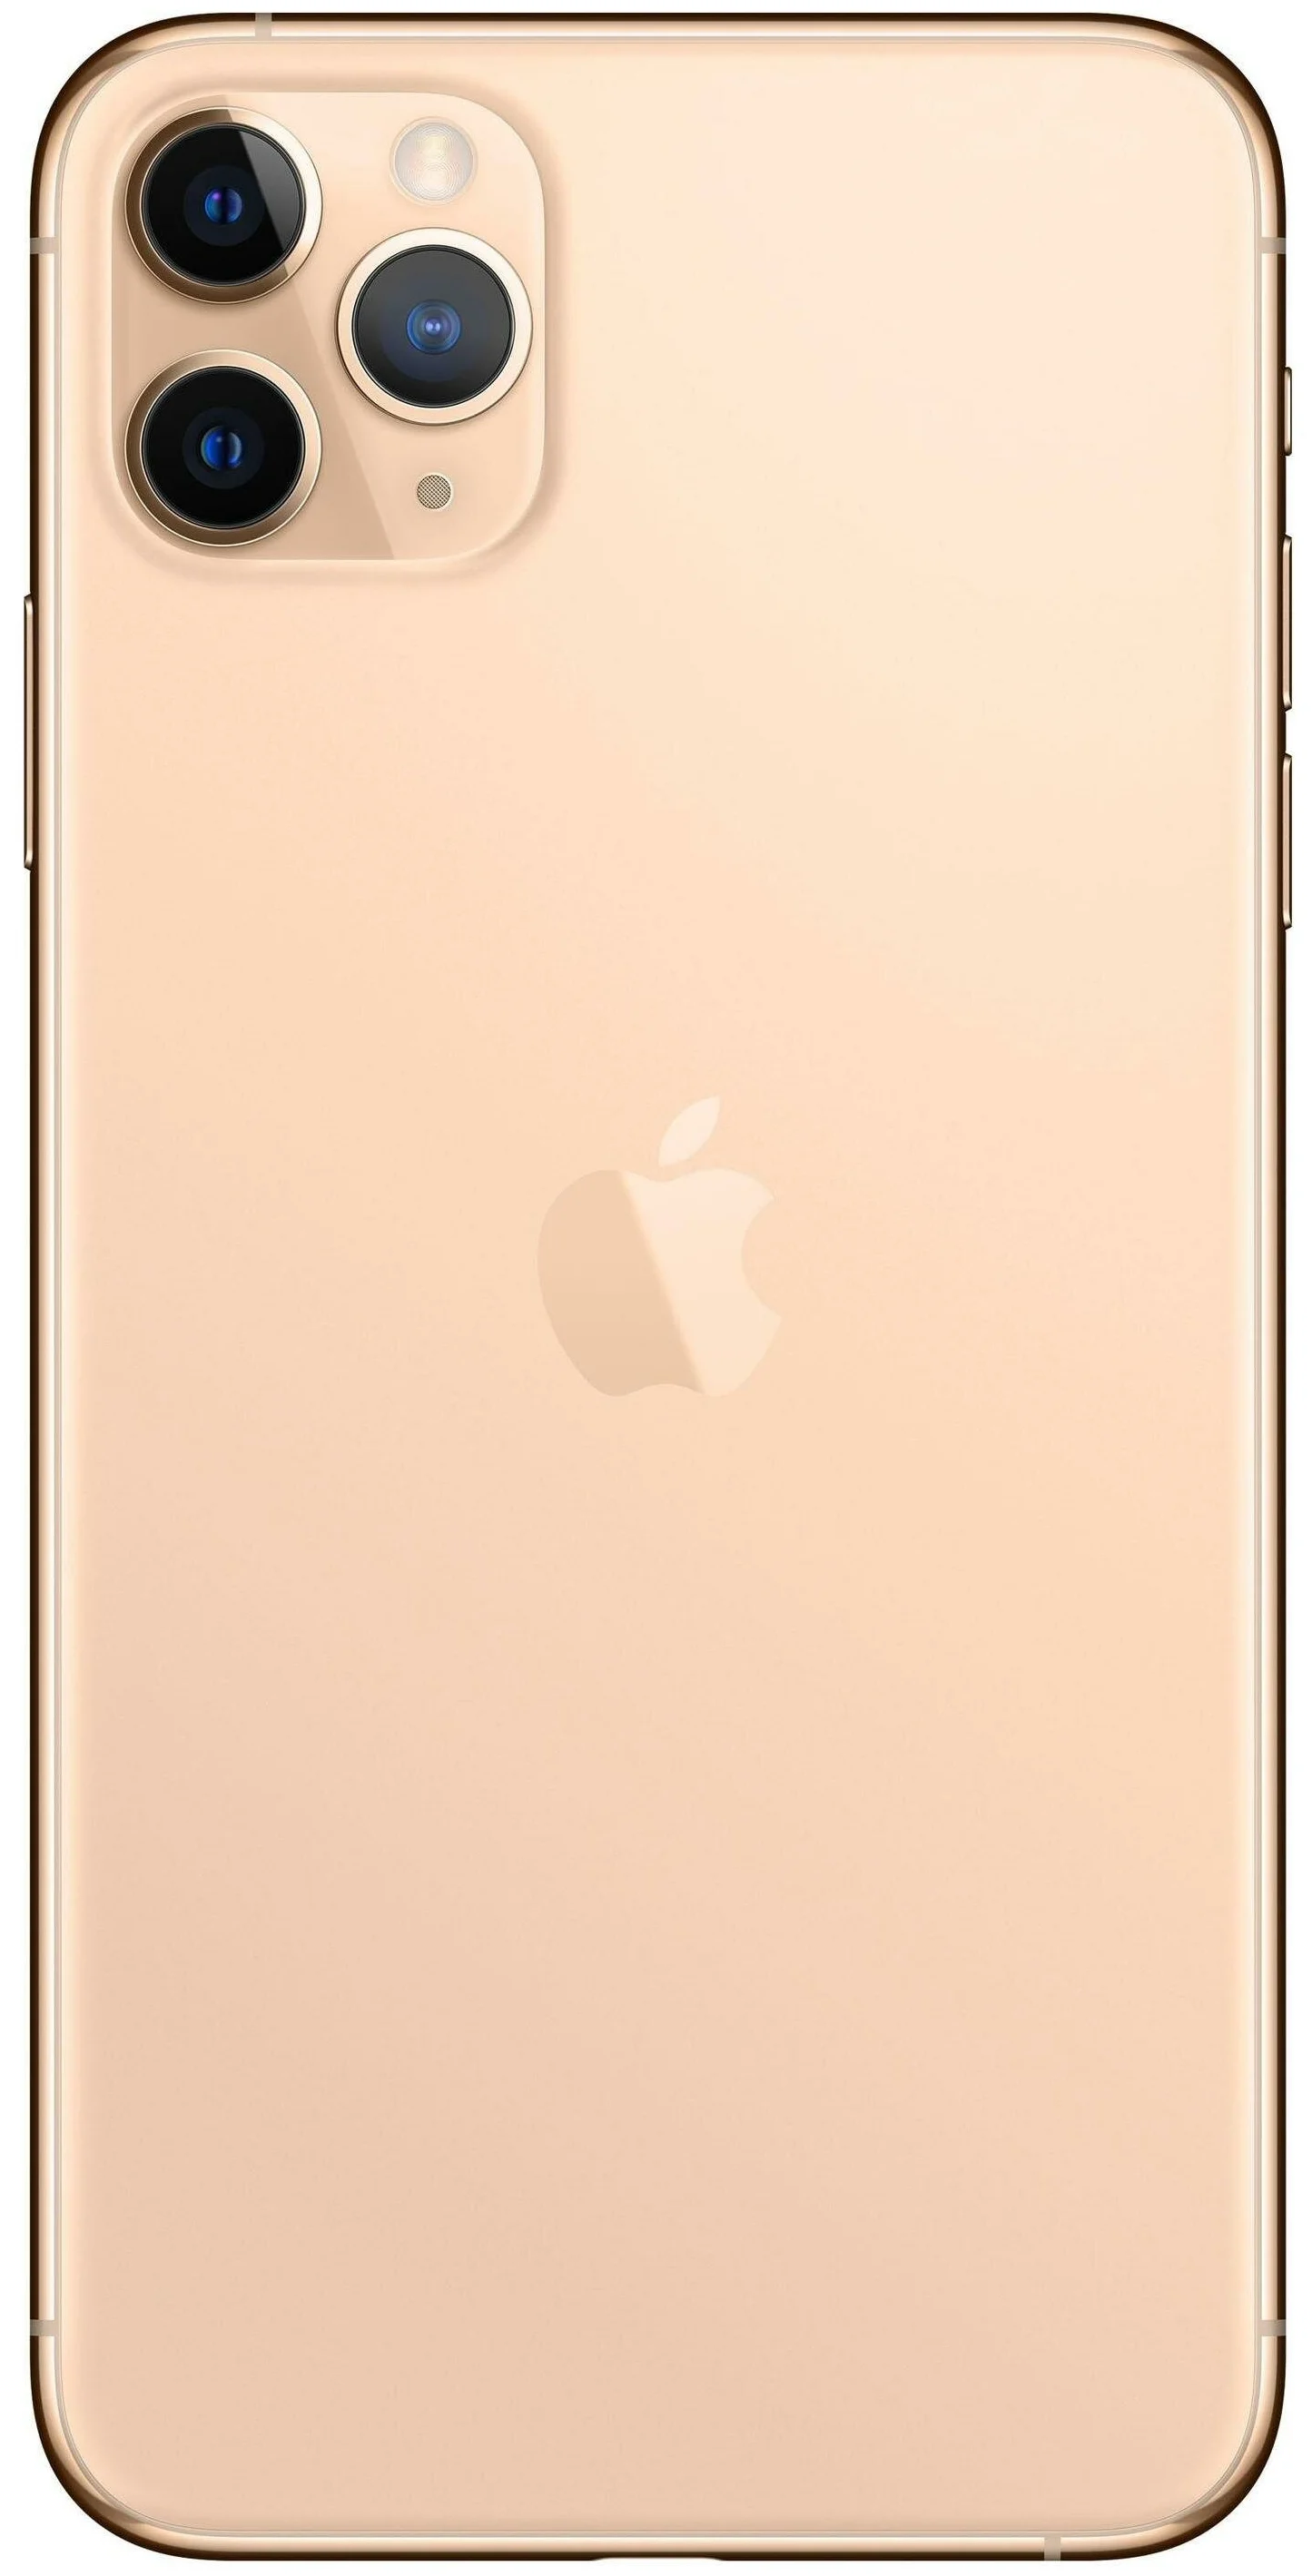 Apple iPhone 11 Pro Max 256GB - память: 256 ГБ